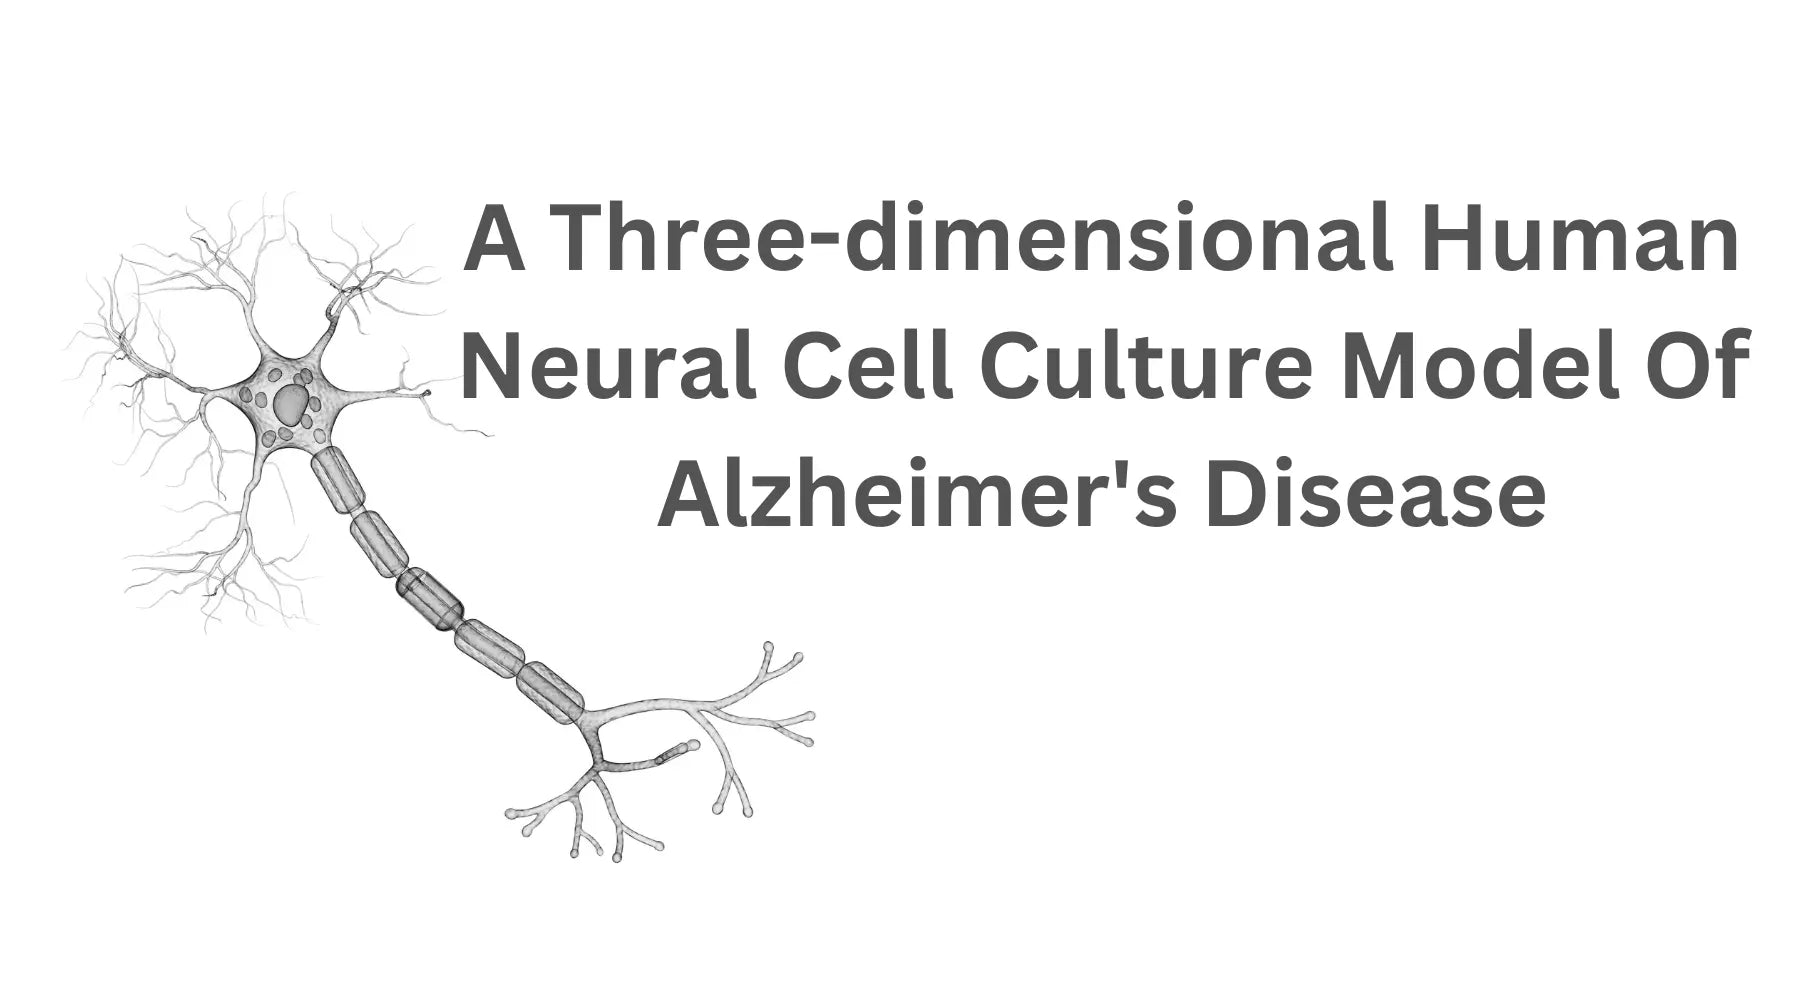 A Three-dimensional Human Neural Cell Culture Model Of Alzheimer's Disease